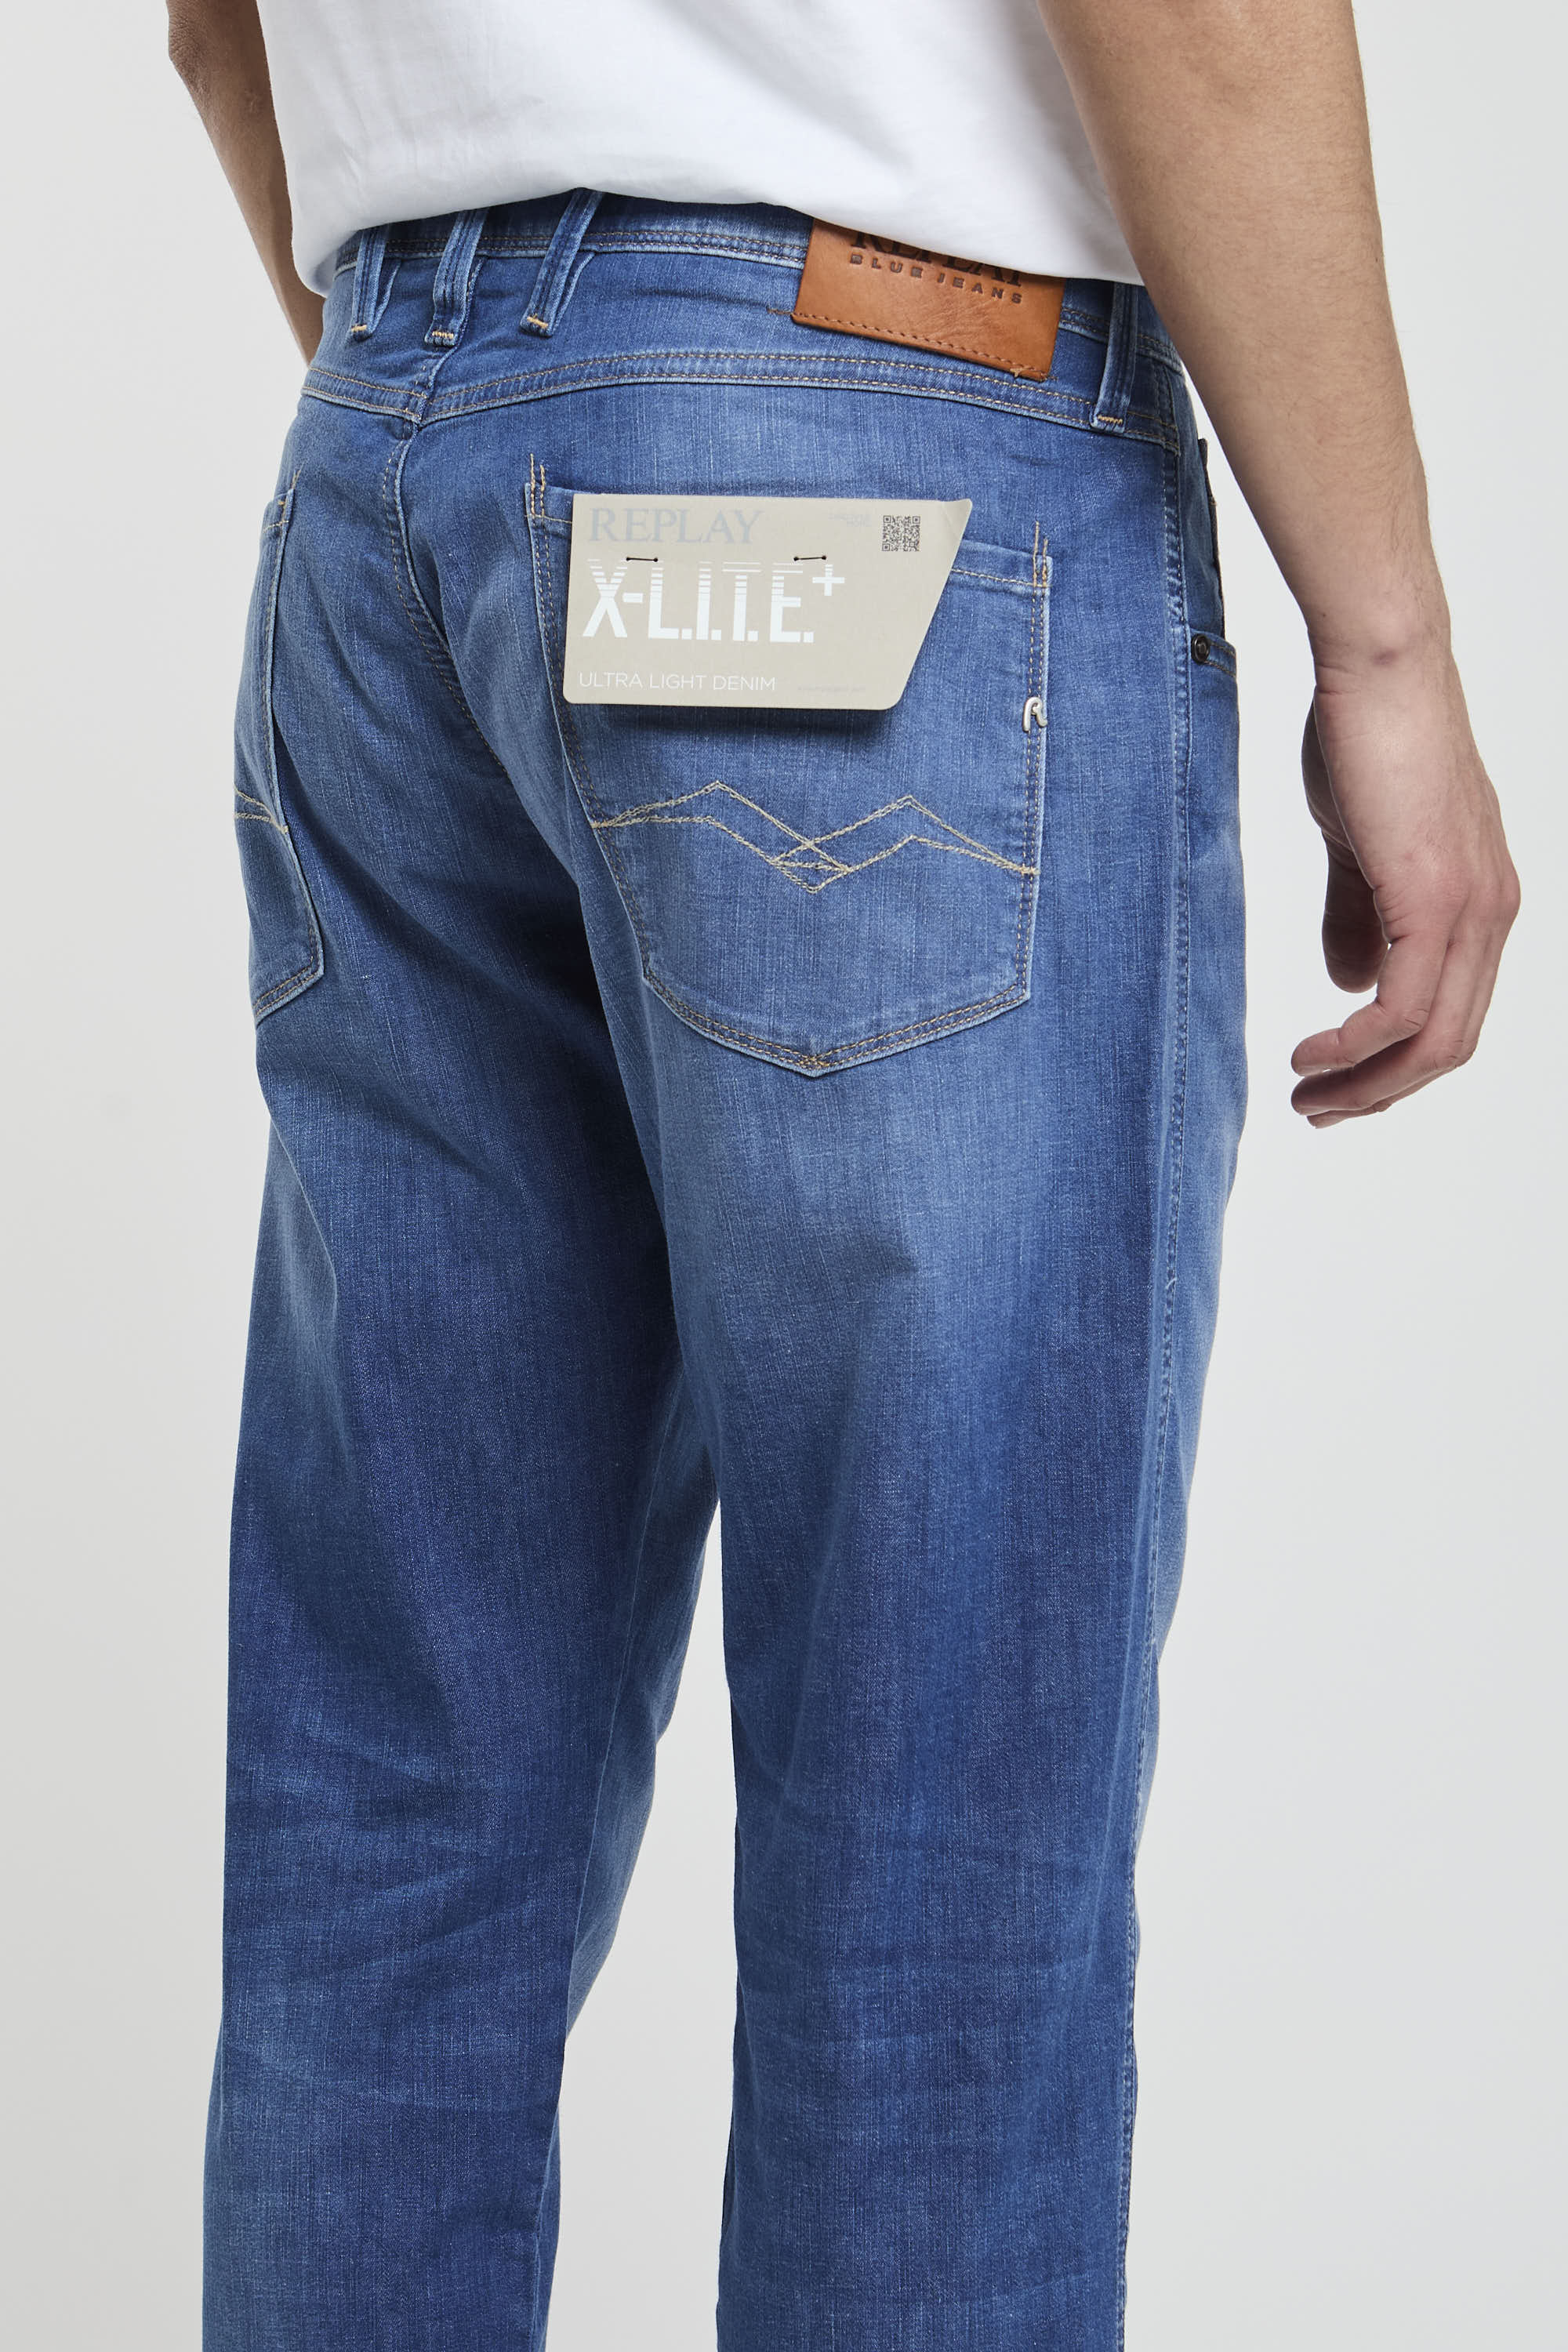 Replay Slim Fit Jeans Denim Made of Cotton/Lyocell/Elastomultiester/Elastane-6